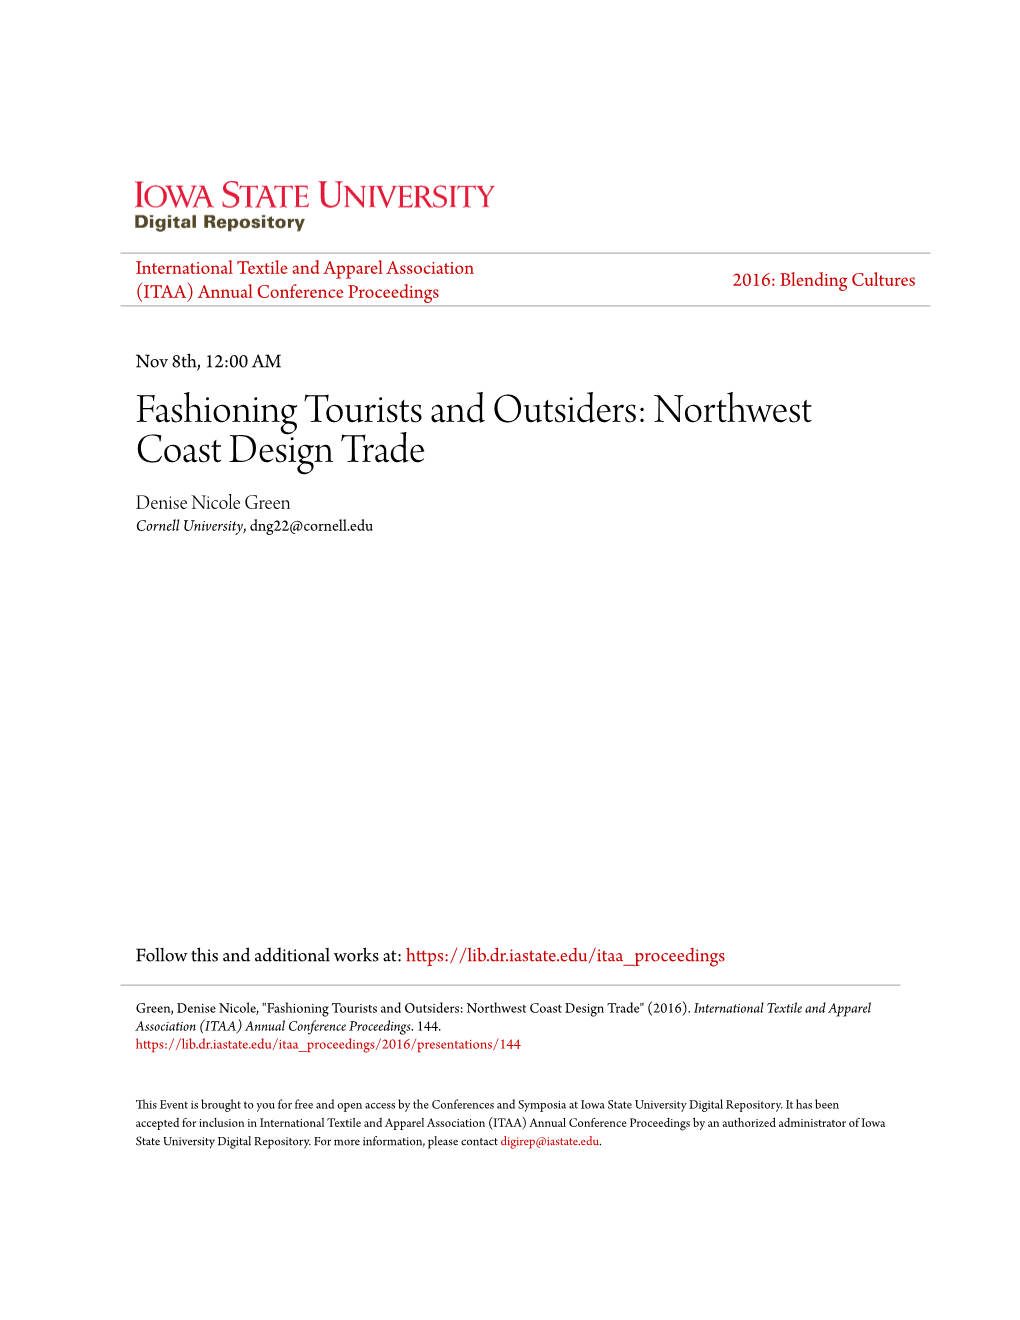 Fashioning Tourists and Outsiders: Northwest Coast Design Trade Denise Nicole Green Cornell University, Dng22@Cornell.Edu